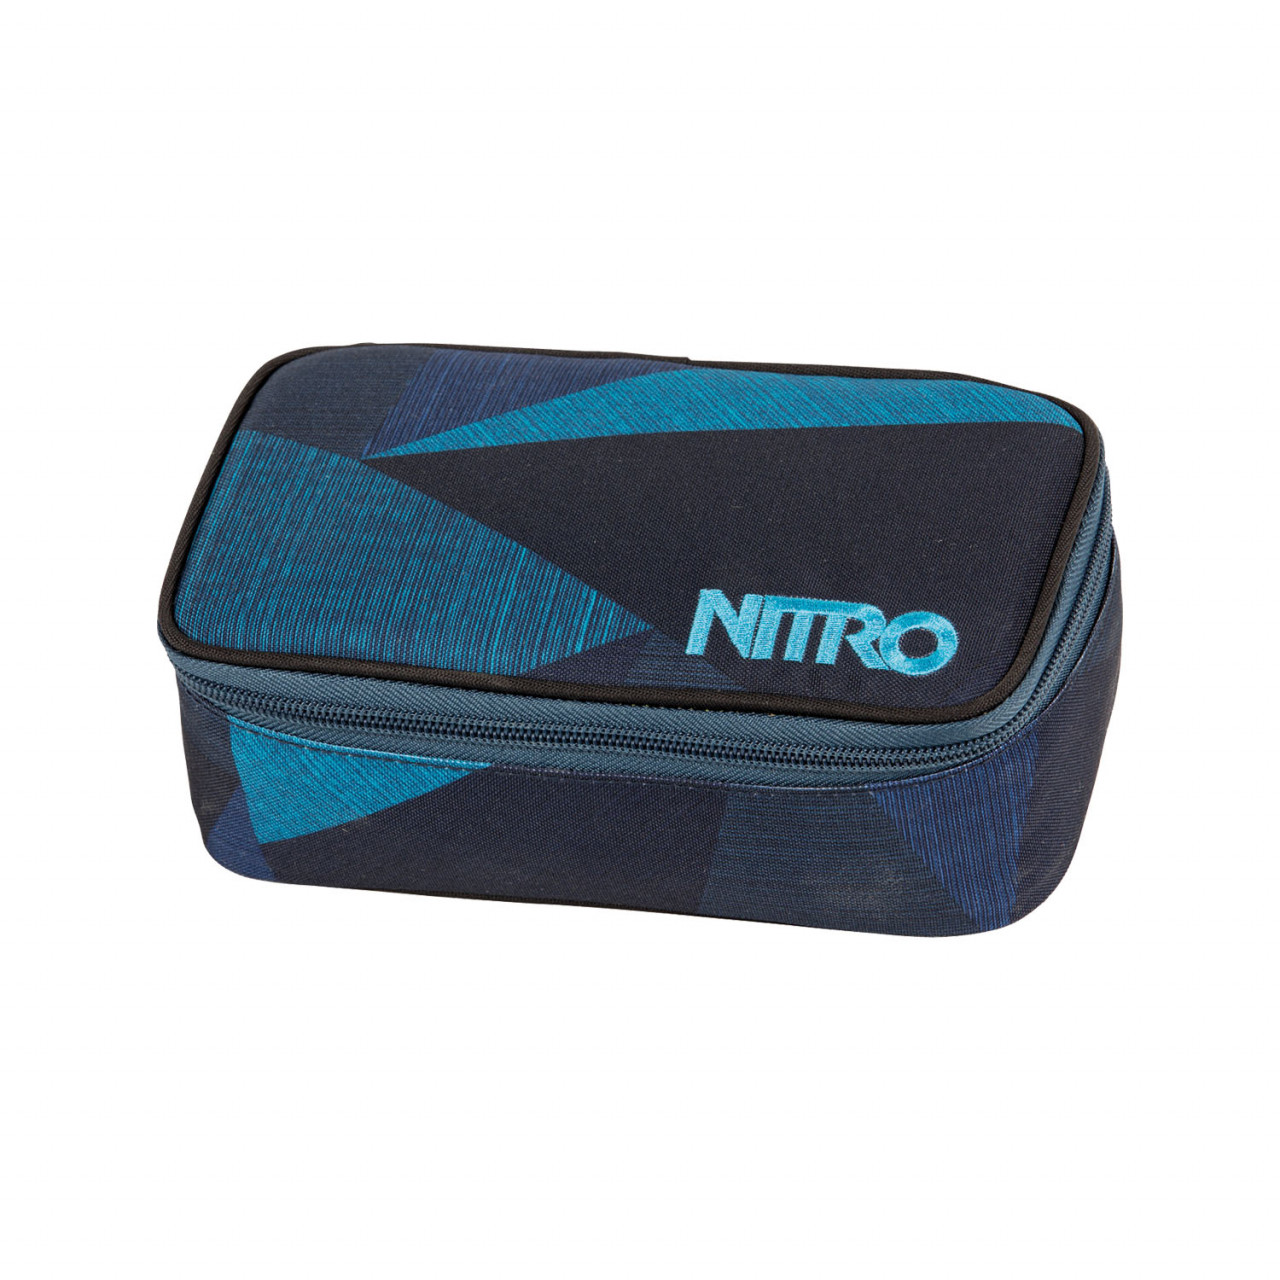 nitro pencil case xl fragments blue